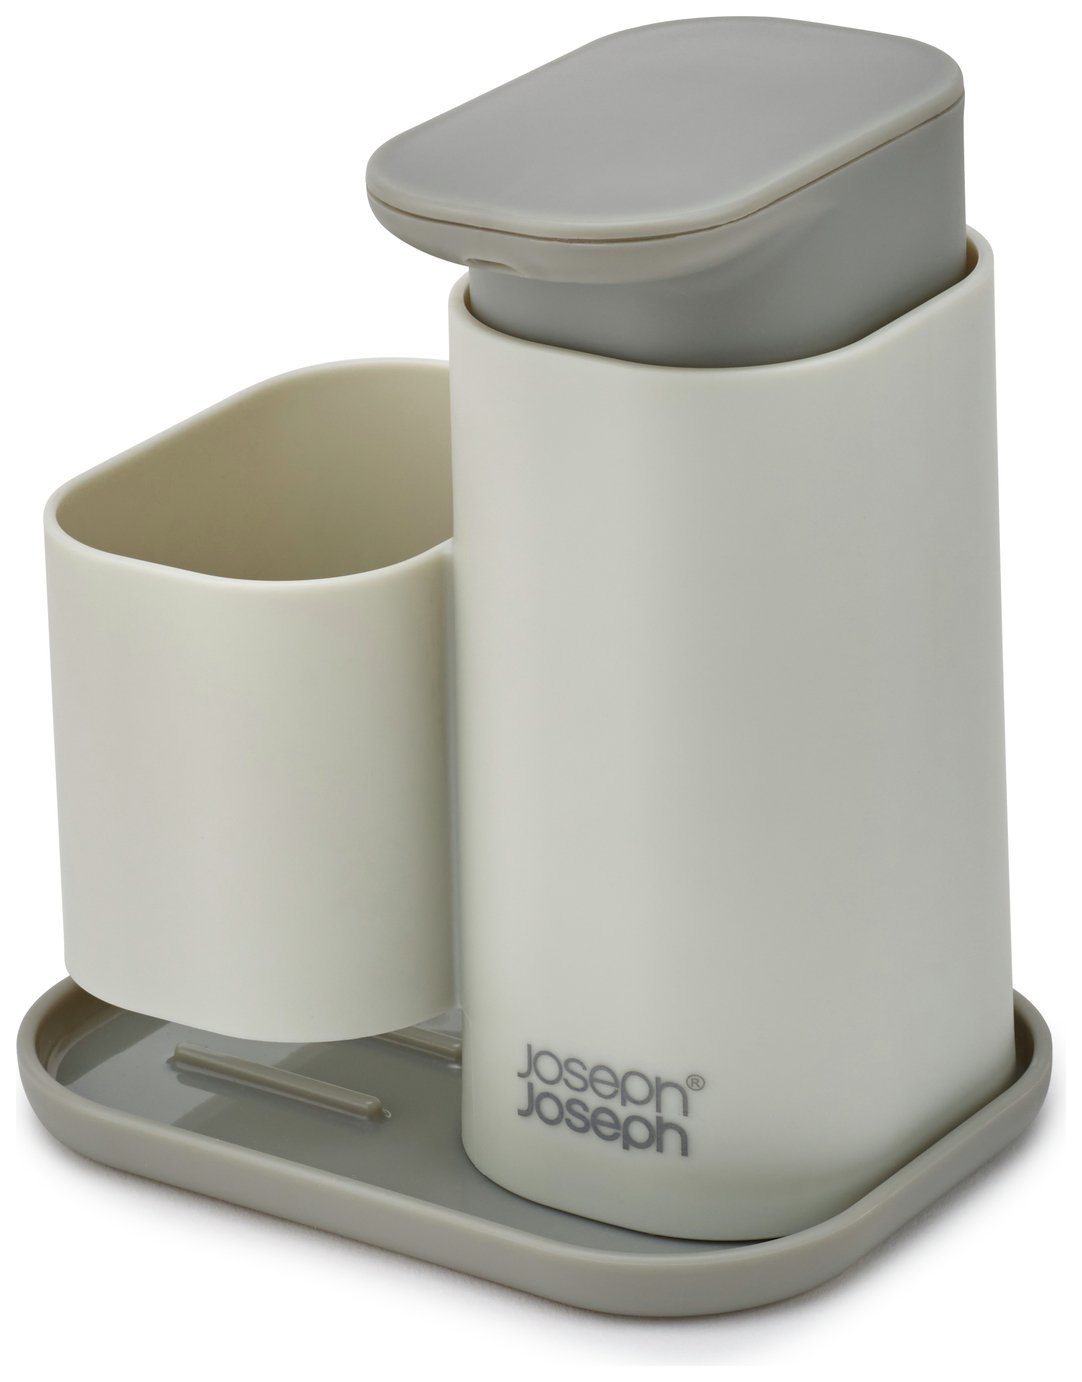 Joseph Joseph Duo Soap Dispenser review